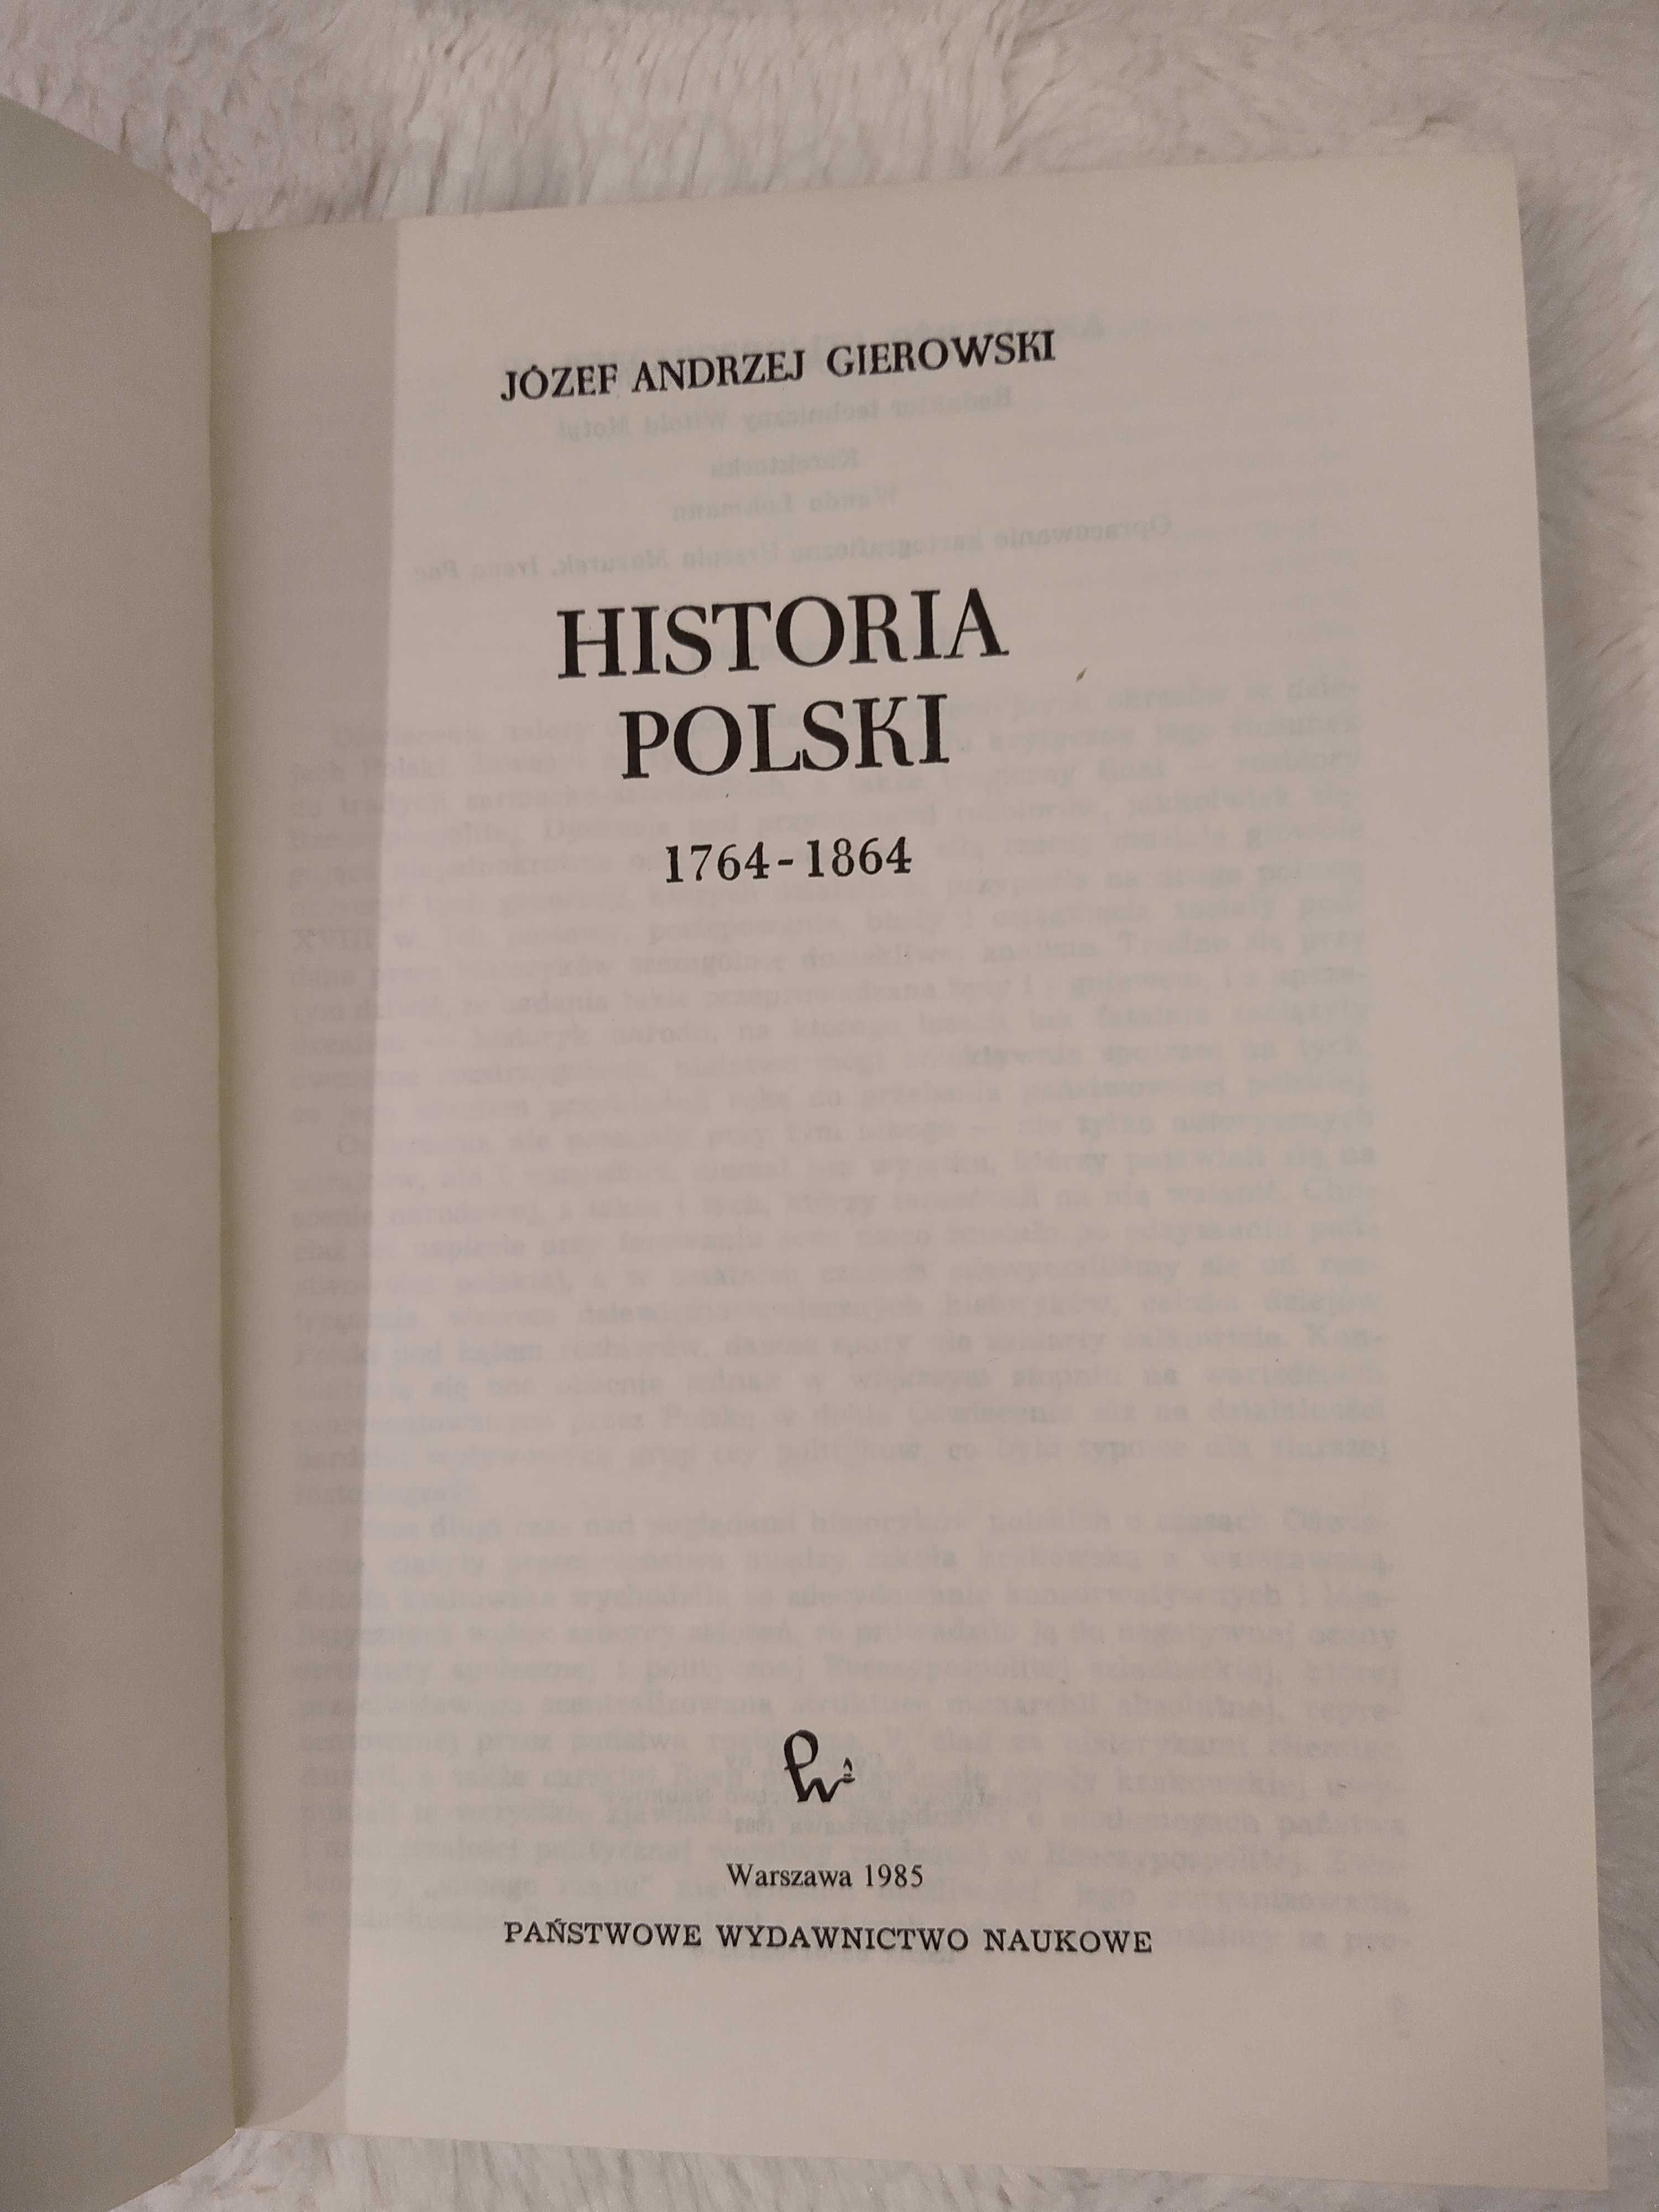 4 książki historyczne - seria "Historia Polski"